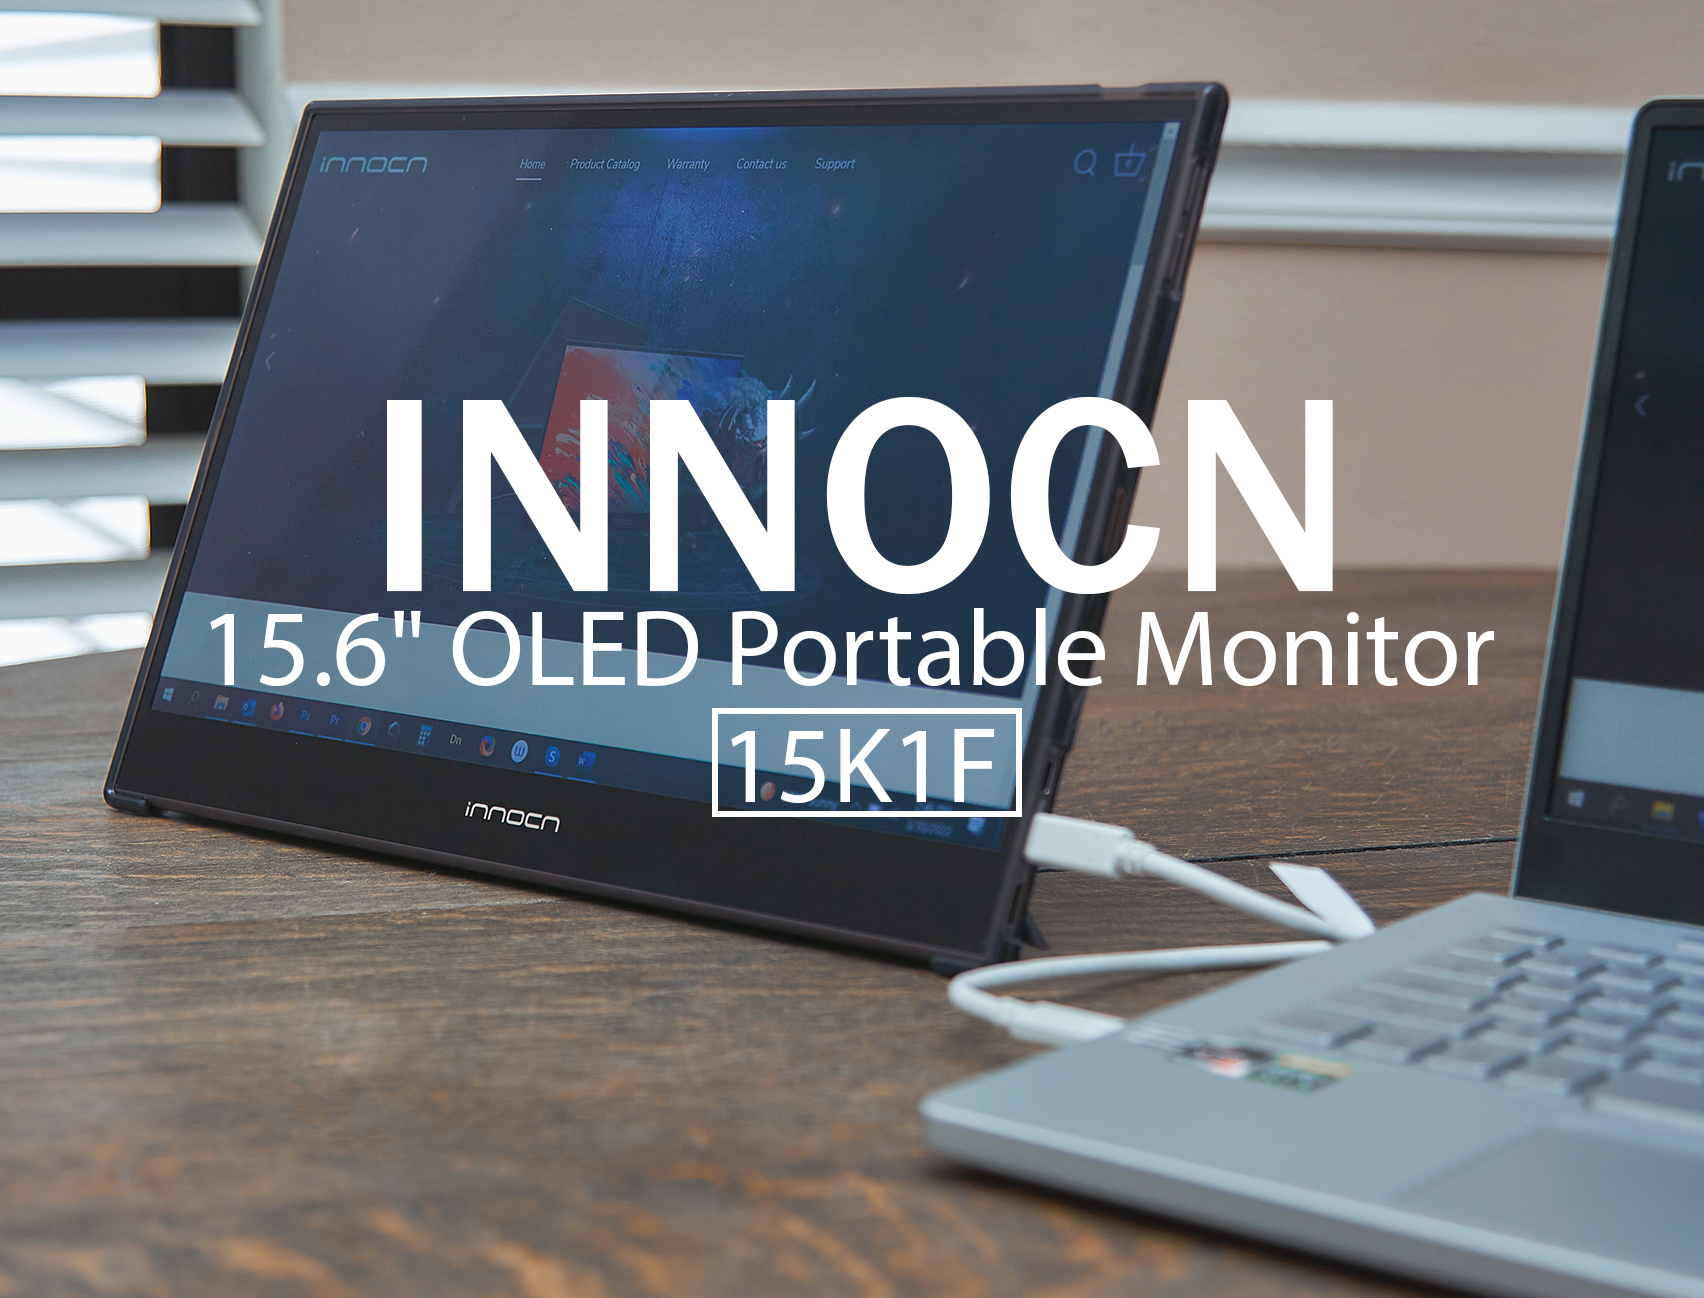 Quick Look: INNOCN OLED Portable Monitor 15K1F